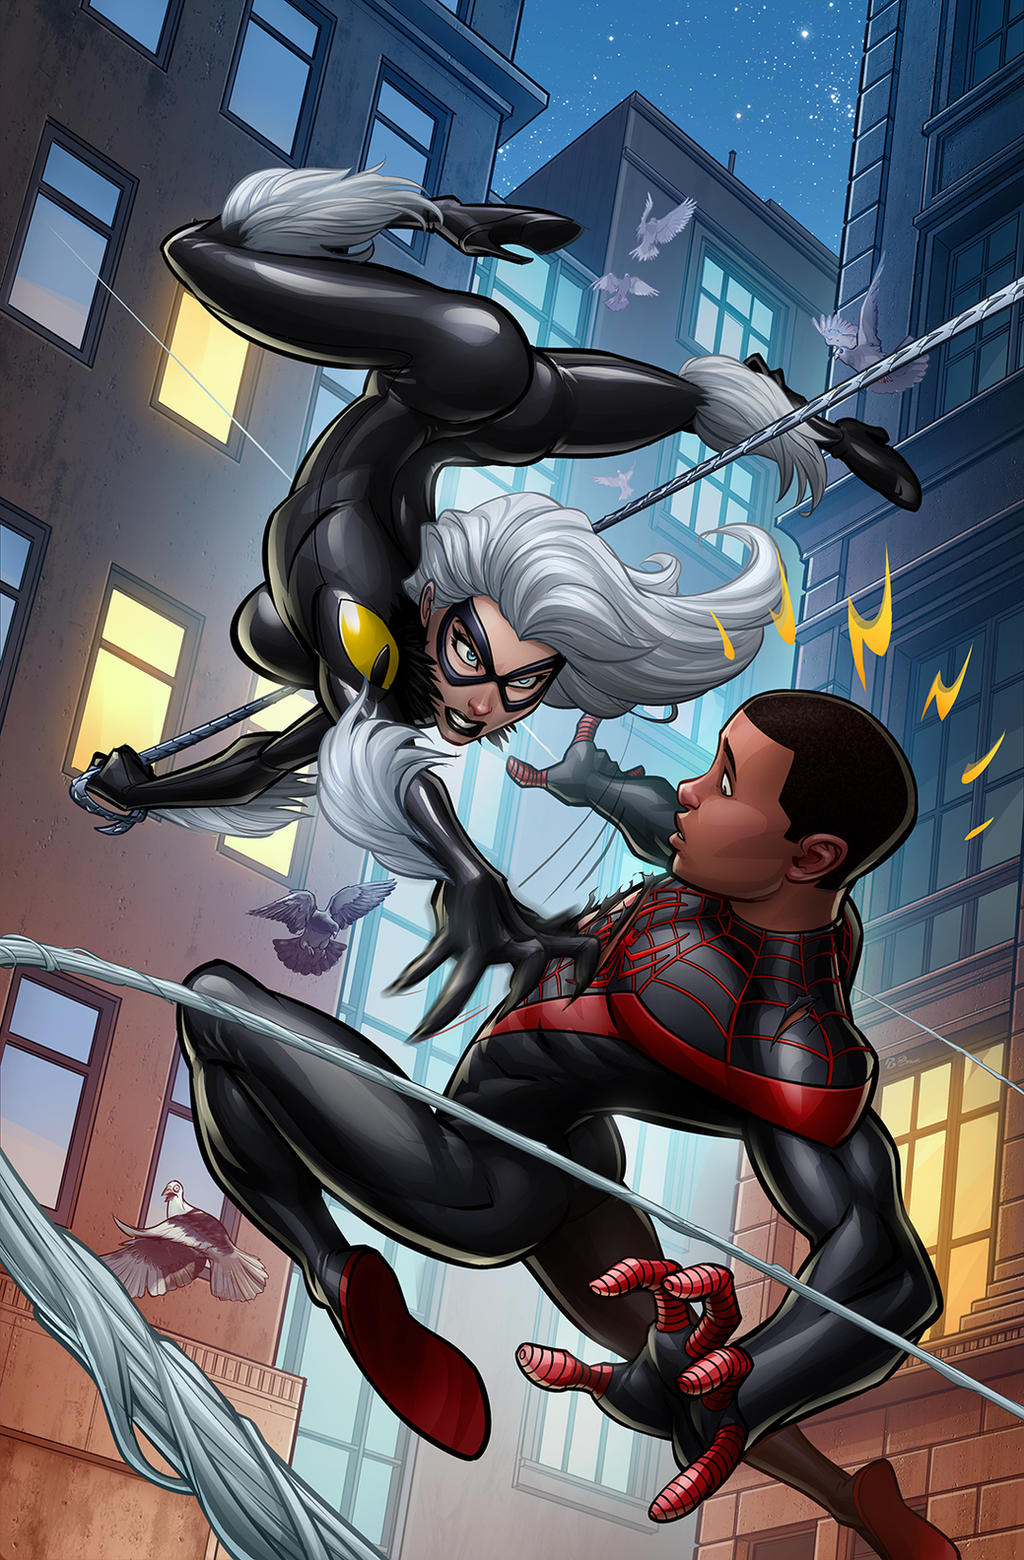 Spider-man #16 cover by PatrickBrown on DeviantArt